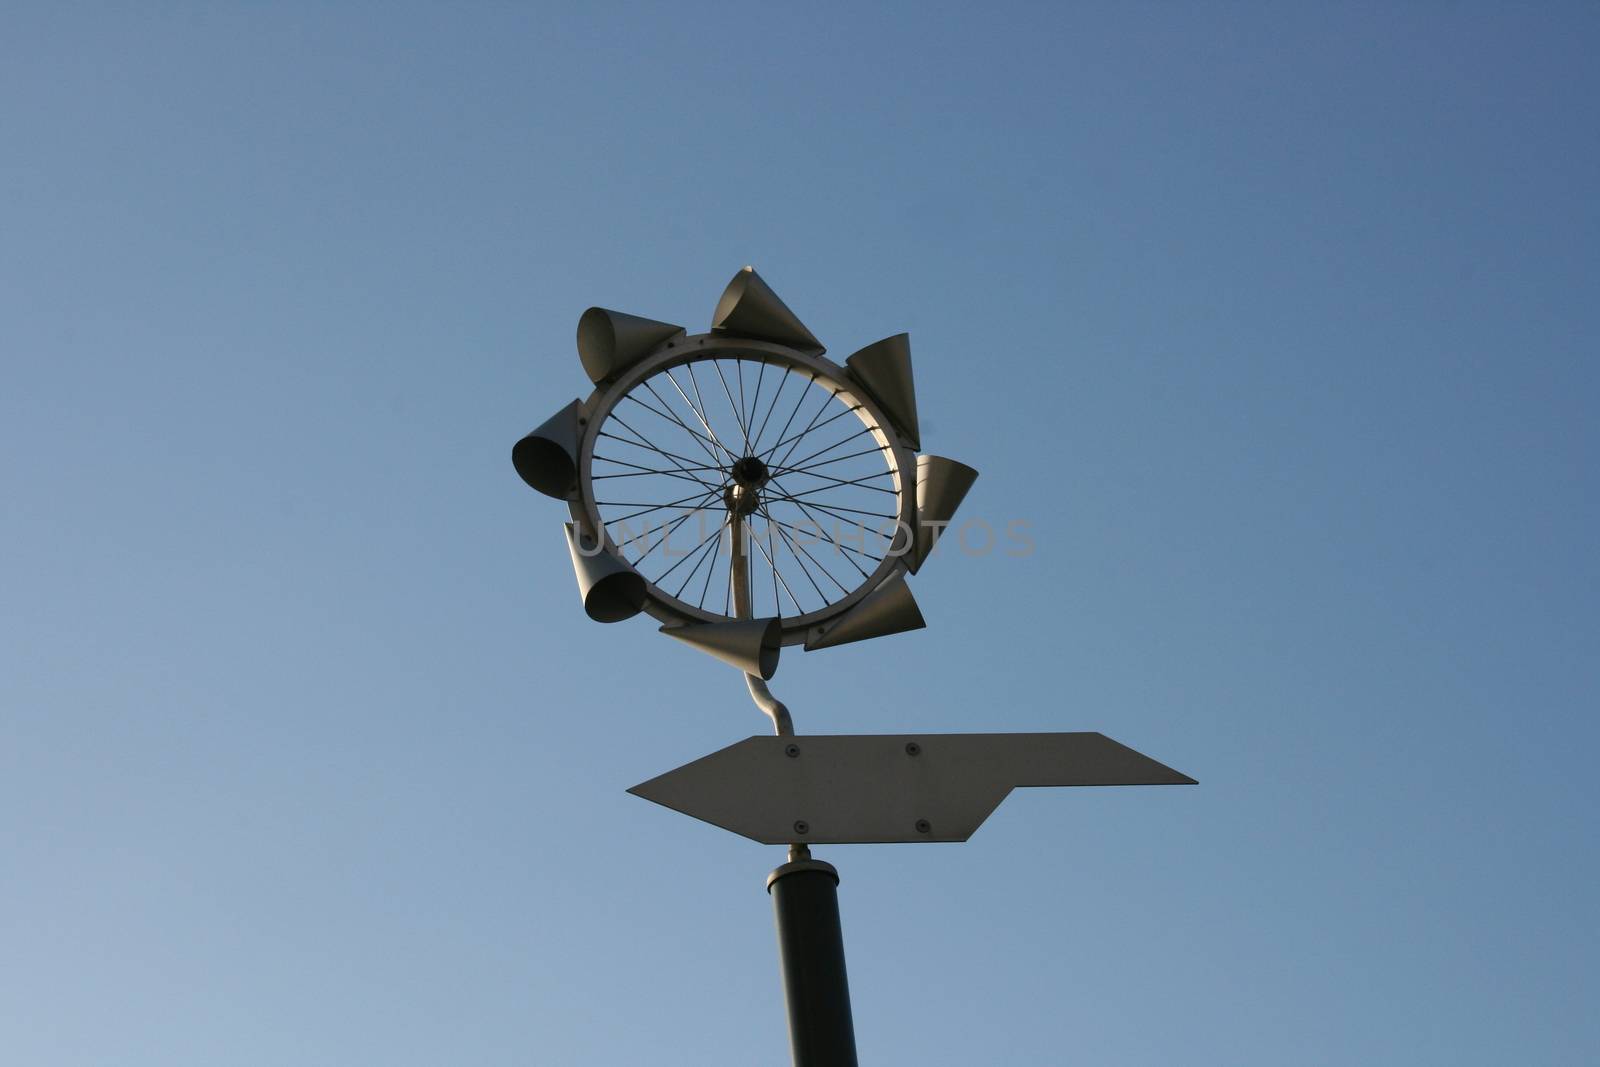 Small windmill with blue sky in the background  Kleines Windrad mit blauem Himmel im Hintergrund by hadot